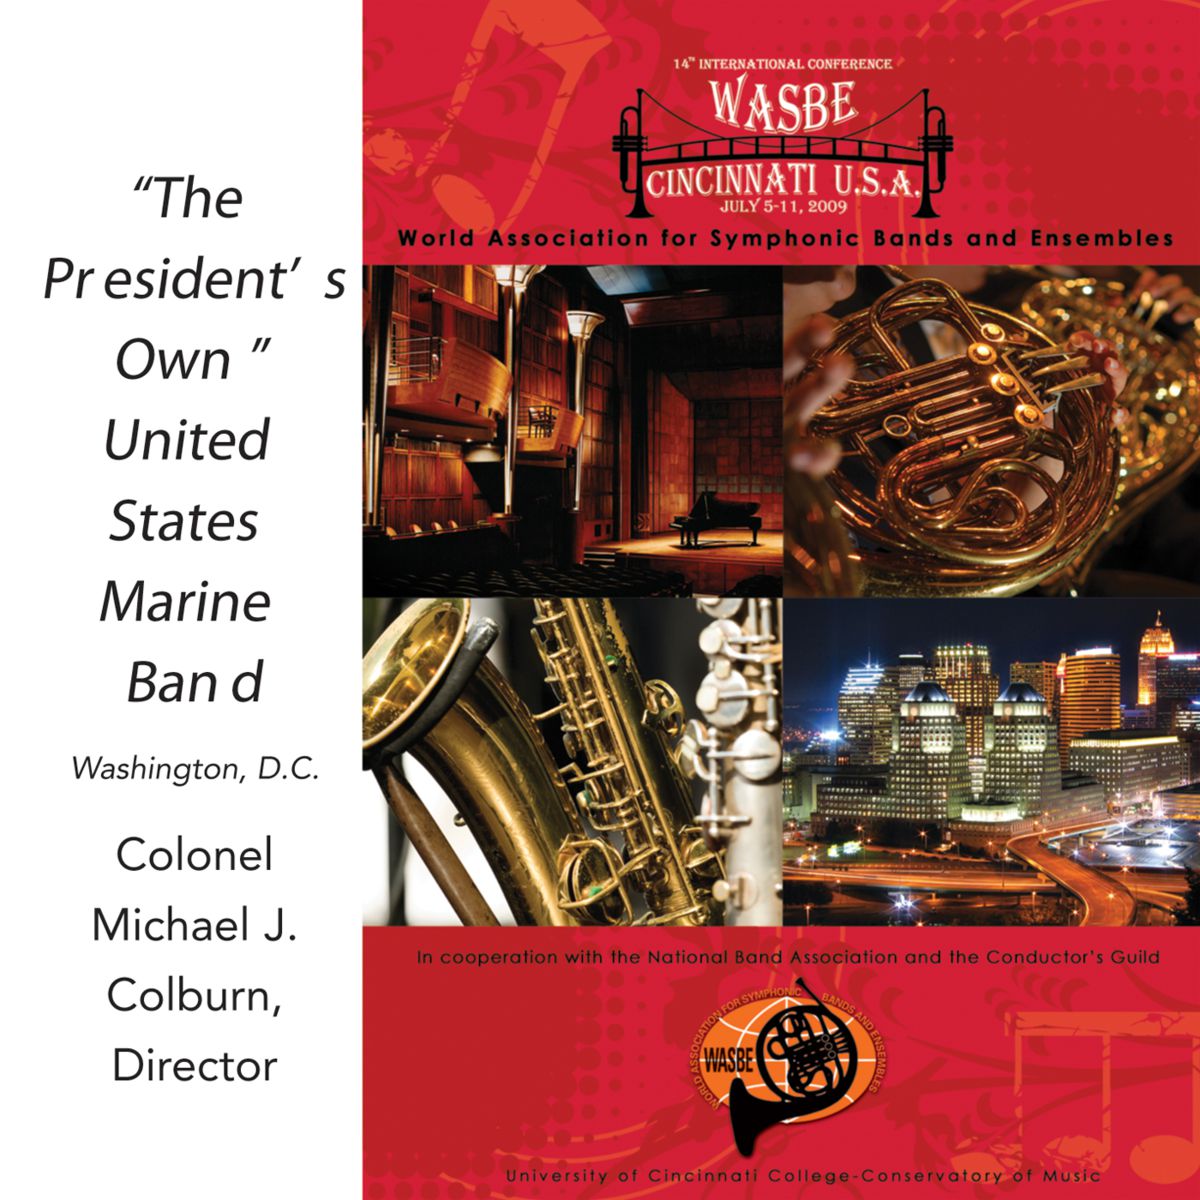 2009 WASBE Cincinnati, USA: "The Presidents Own" United States Marine Band - klik hier